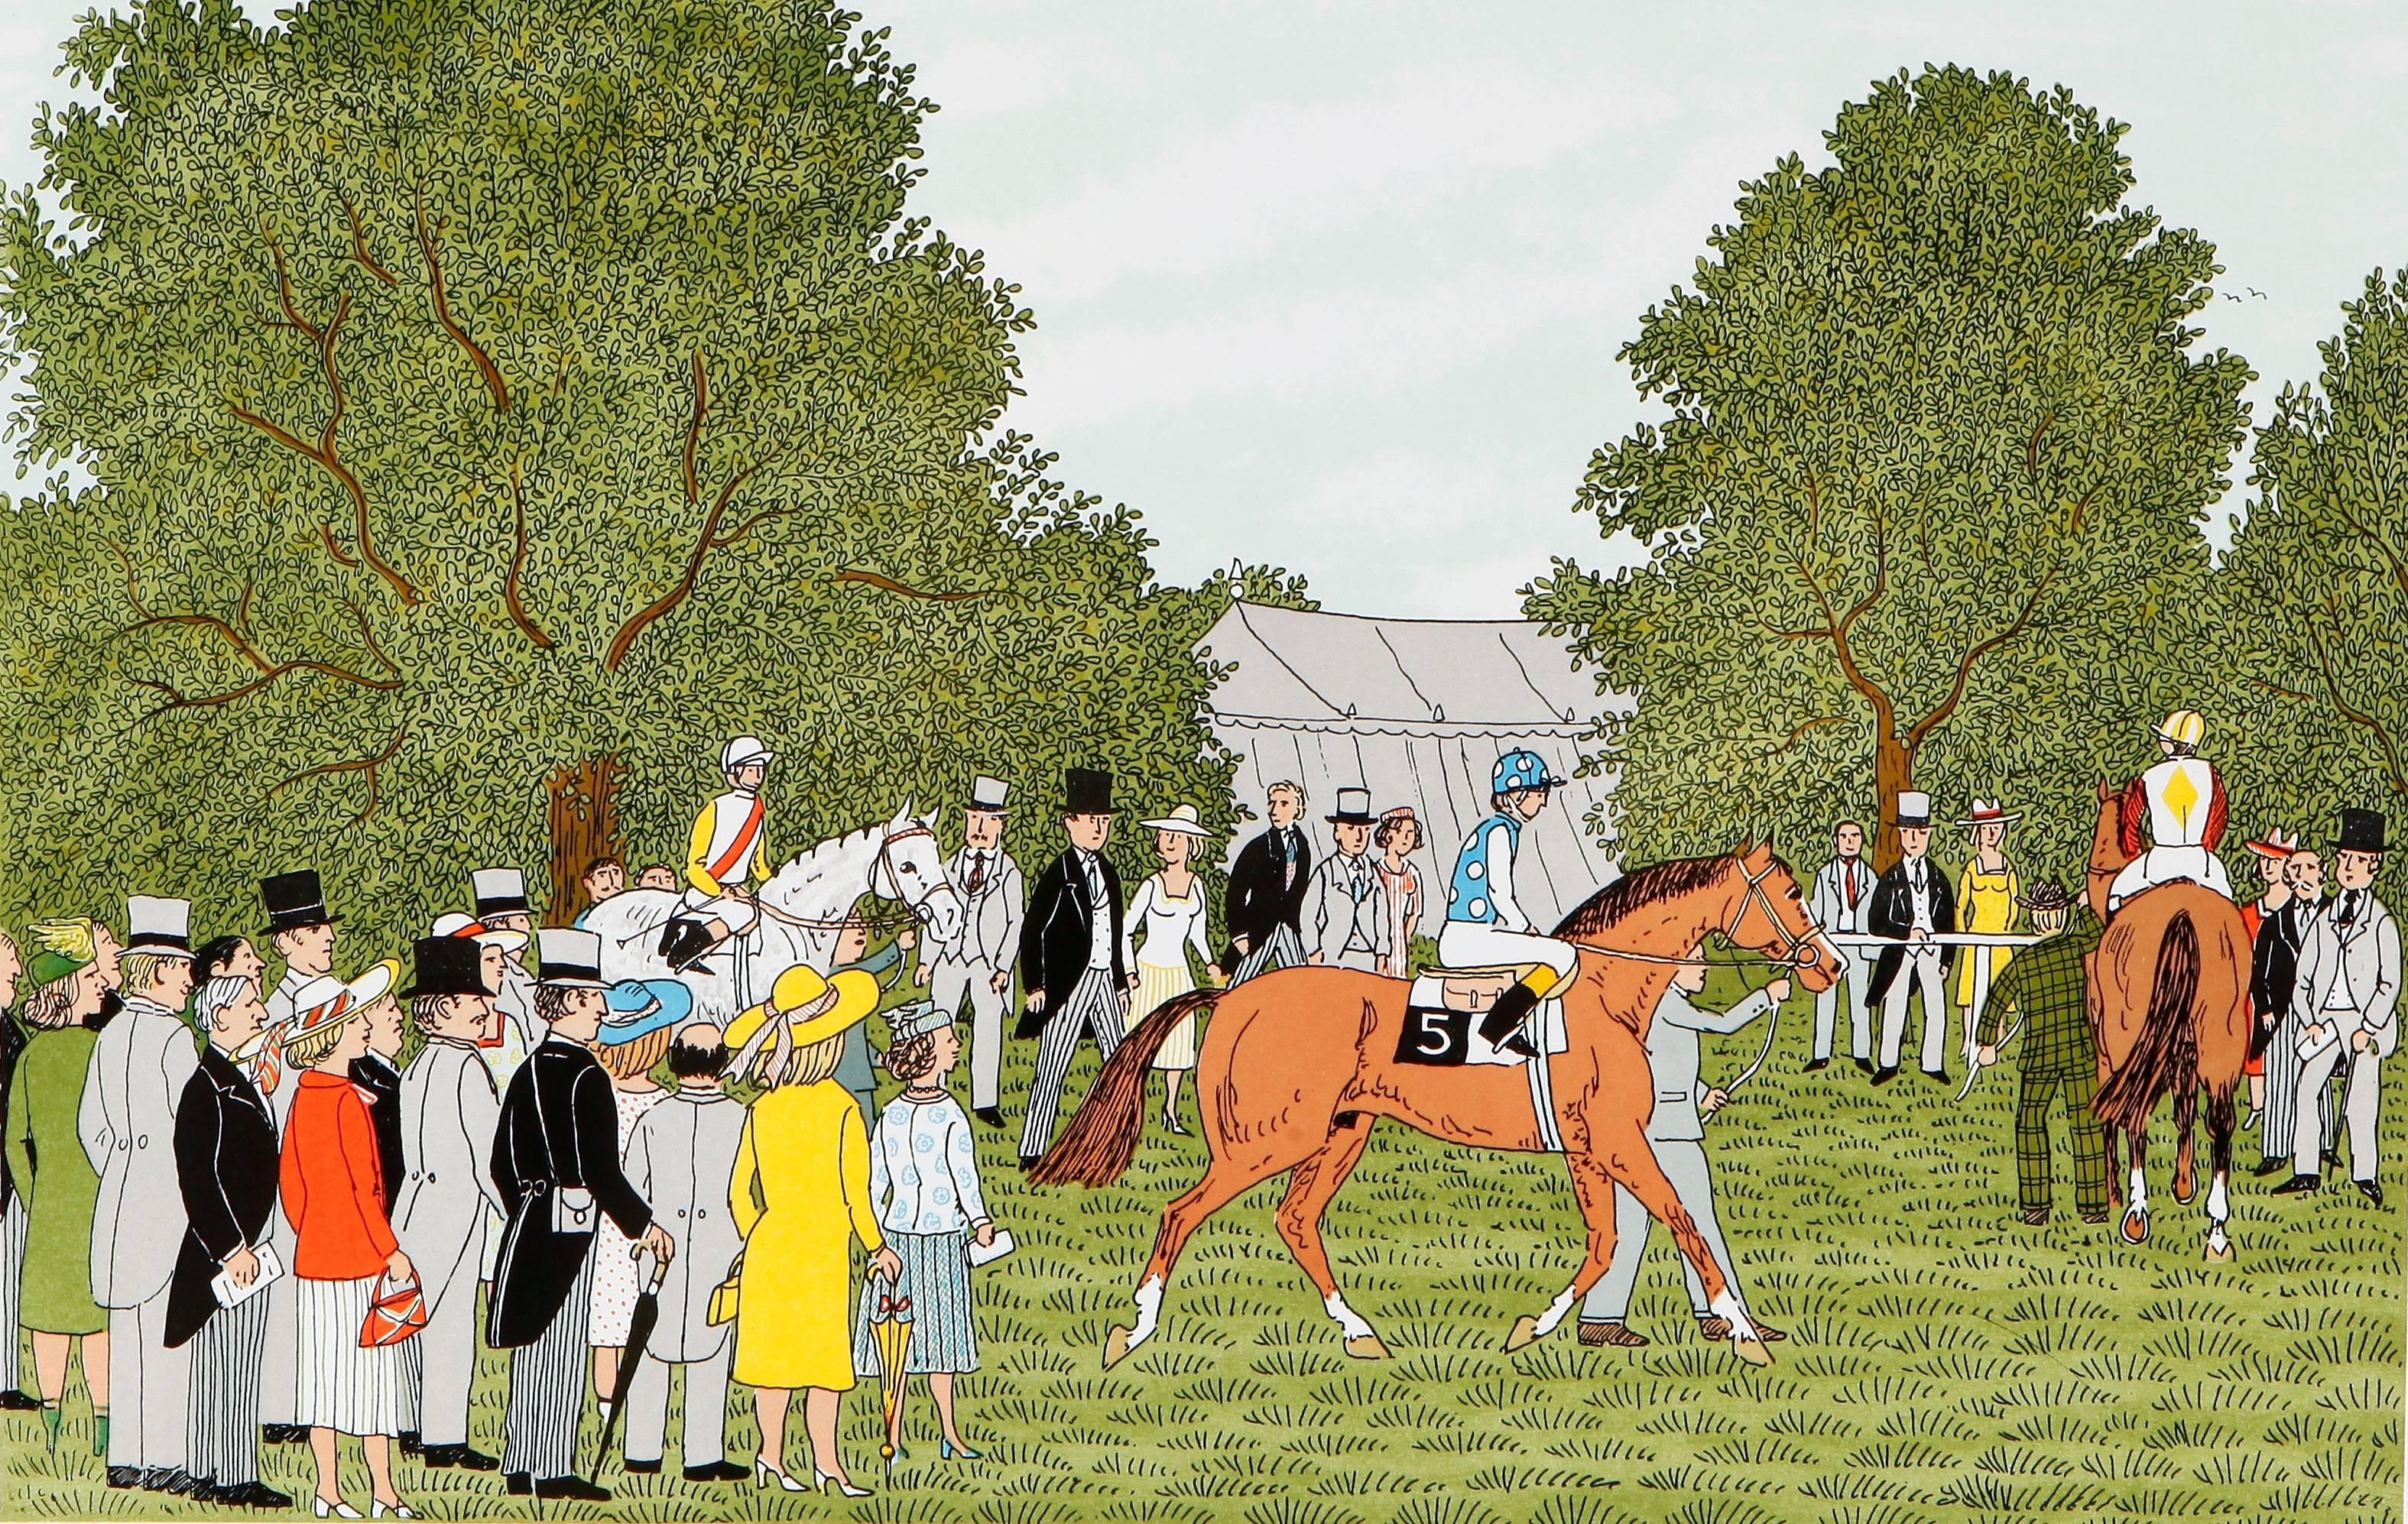 Vincent Haddelsey Animal Print - Horses - 3 original lithographs